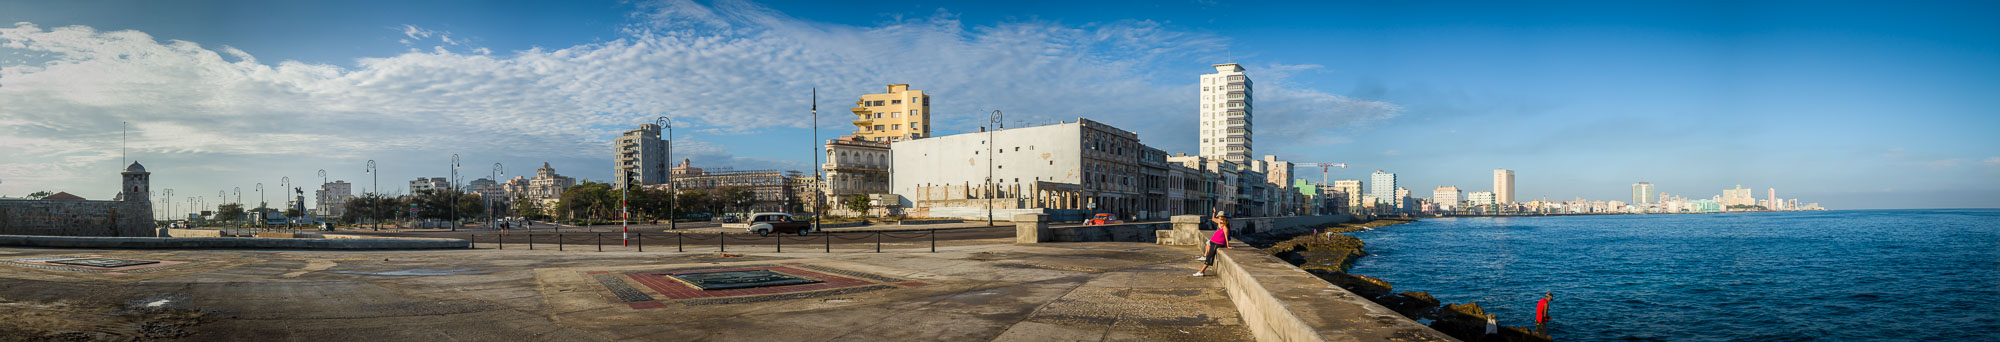 Havana Architecture